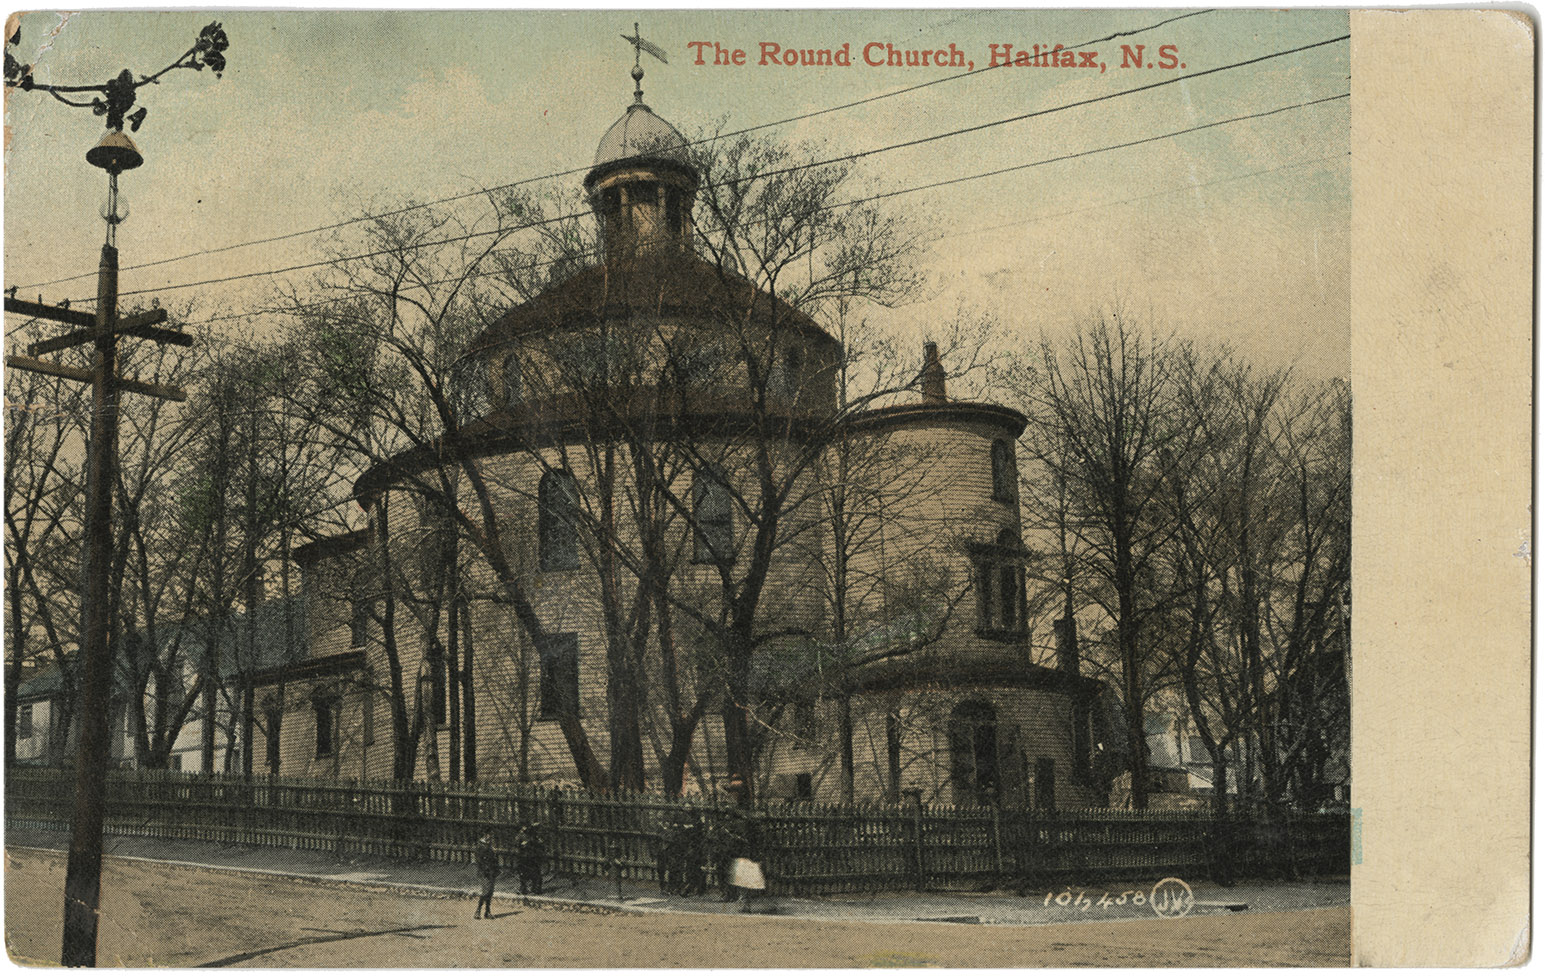 communityalbums - The Round Church, Halifax, N.S.